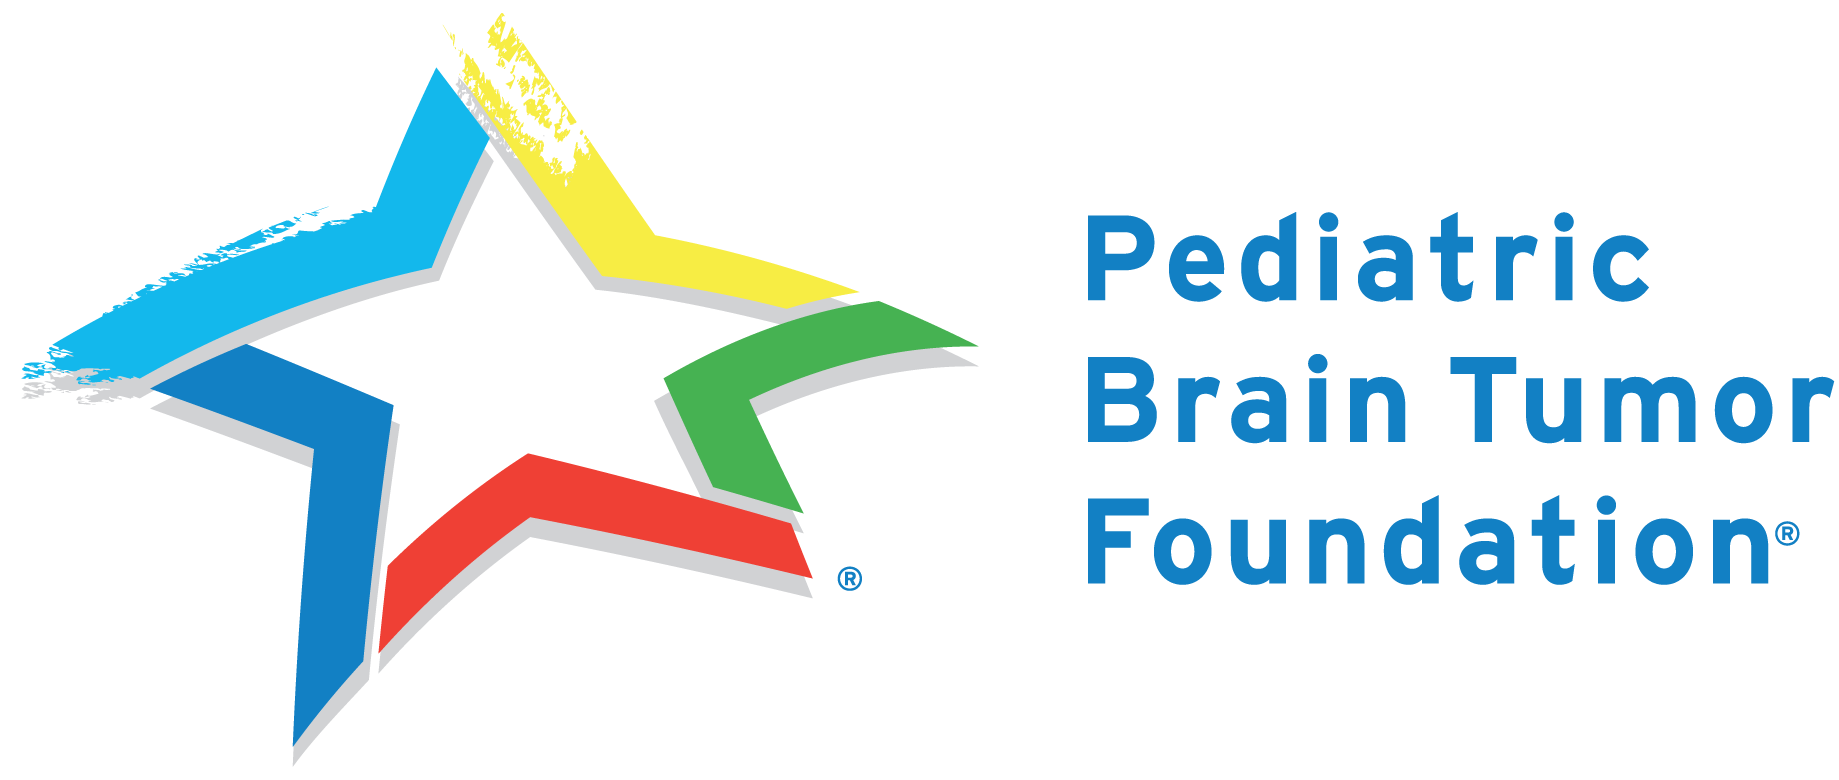 Pediatric Brain Tumor Foundation logo